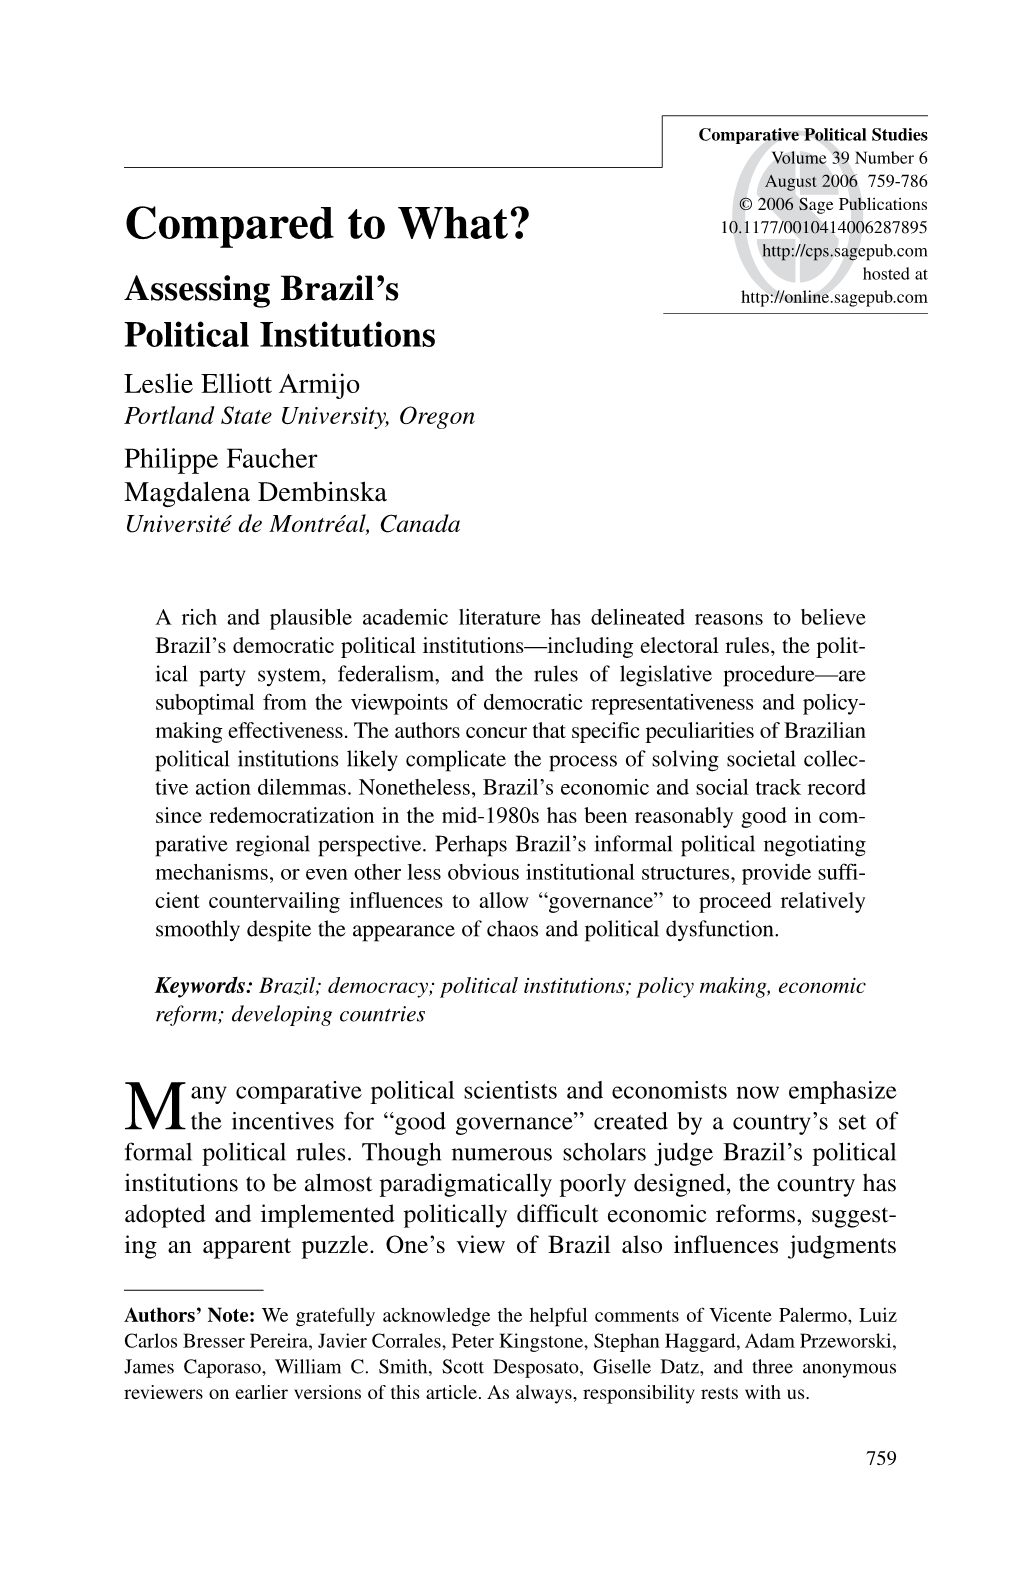 Assessing Brazil's Political Institutions